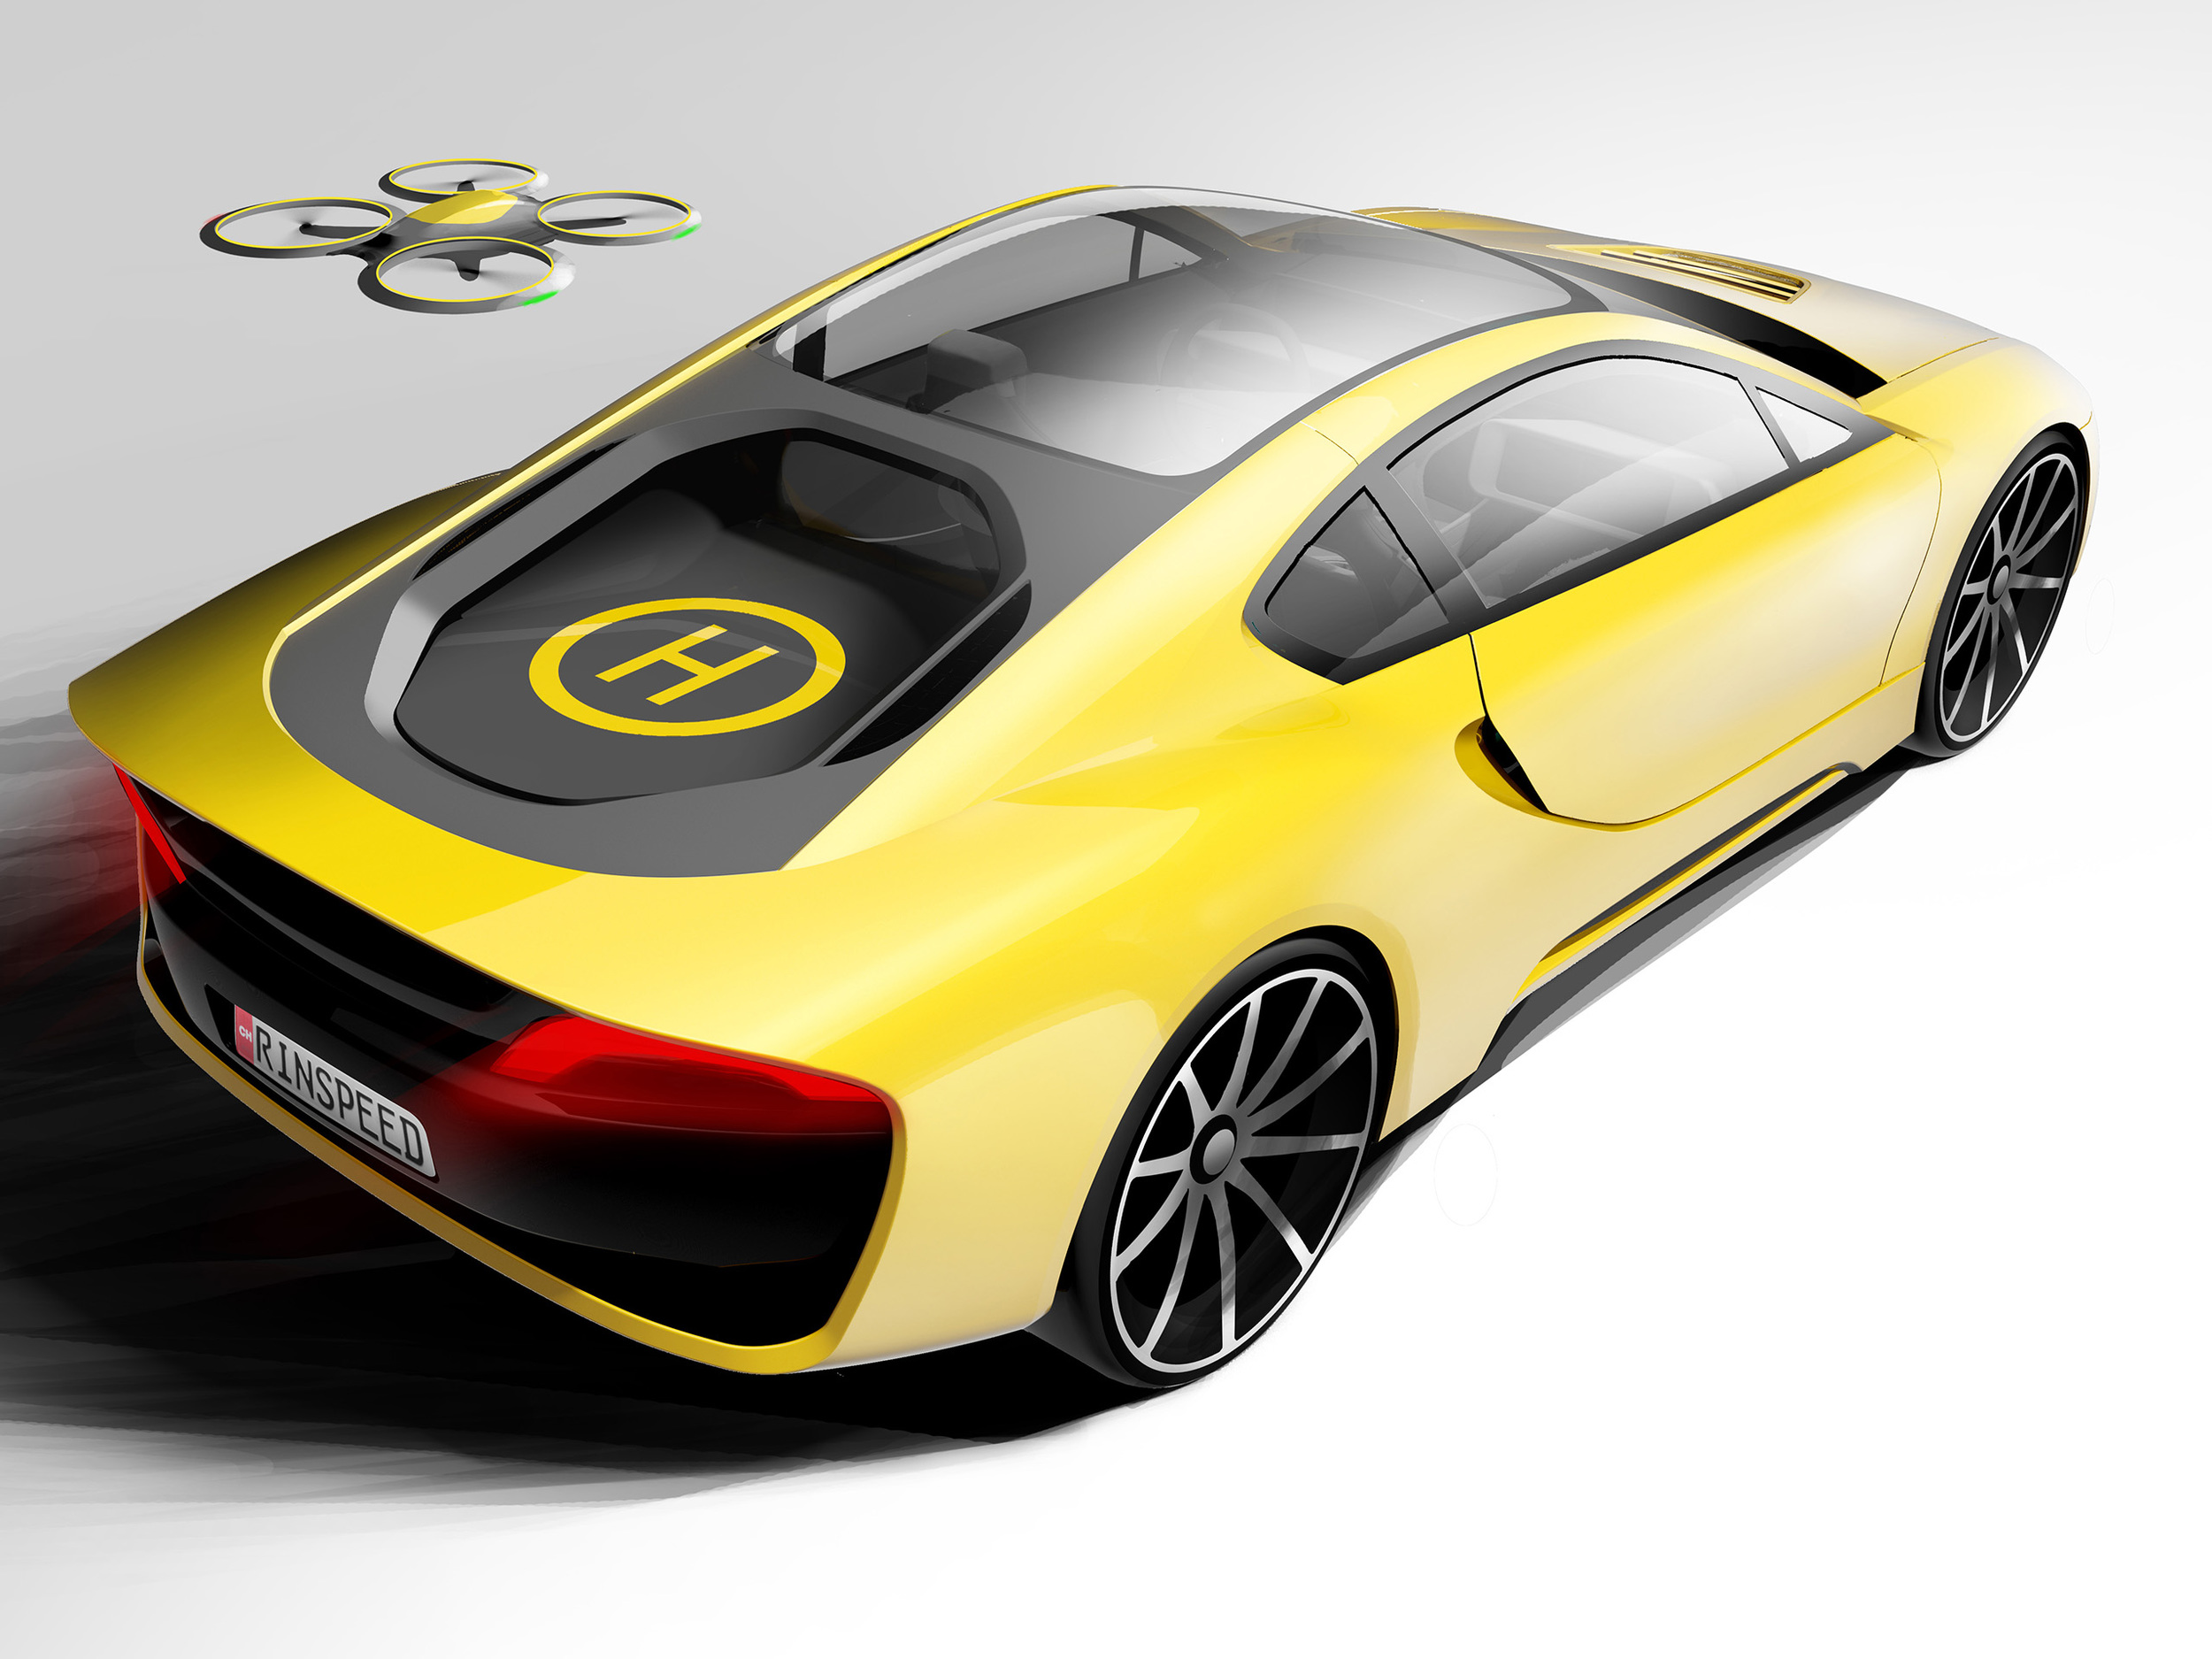 Rinspeed reveals new driverless Etos concept car